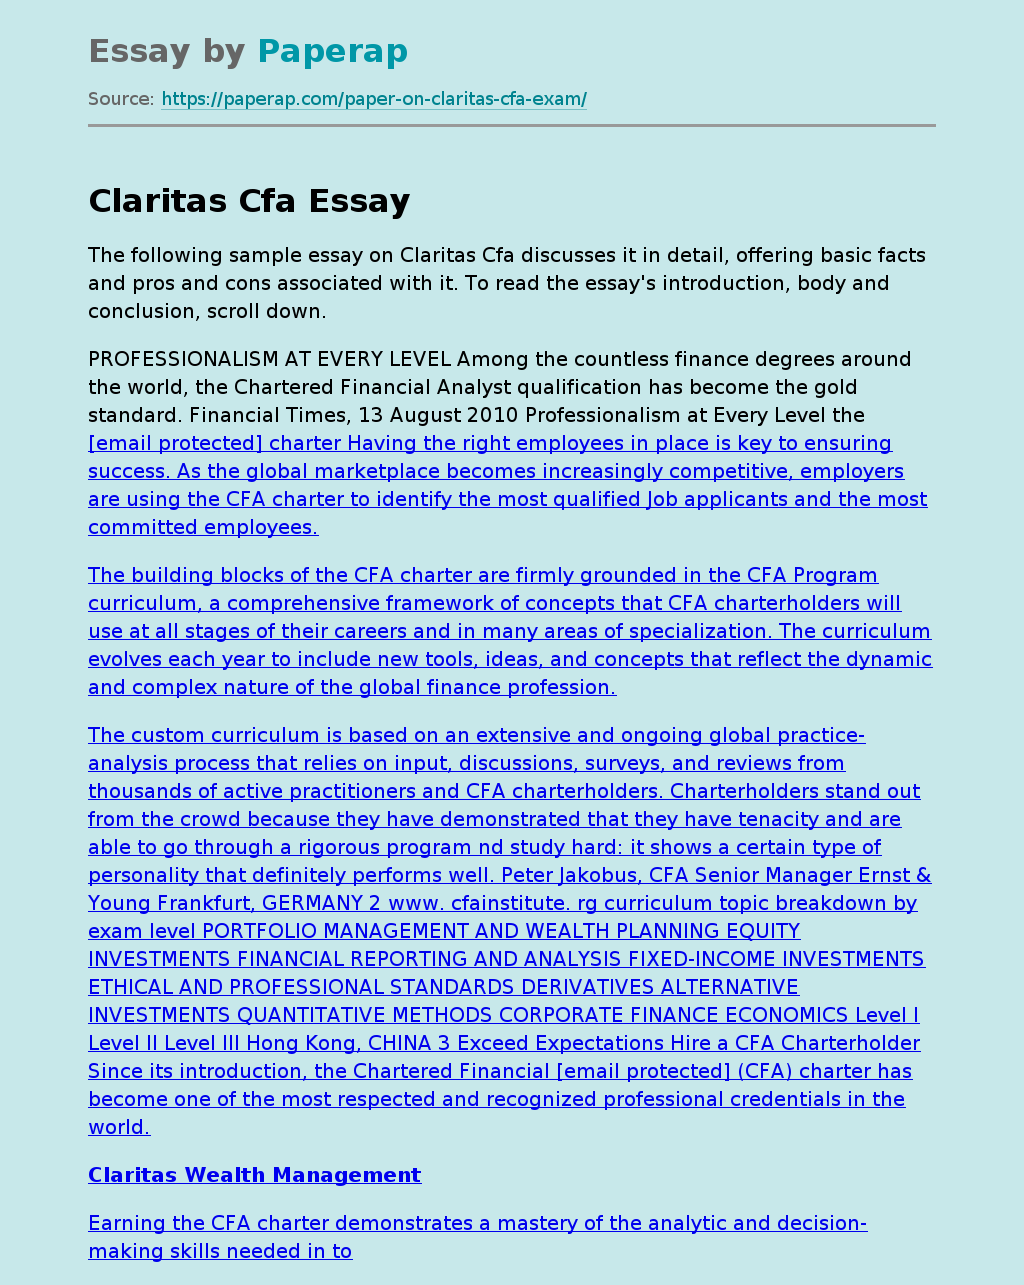 Claritas CFA: Pros and Cons